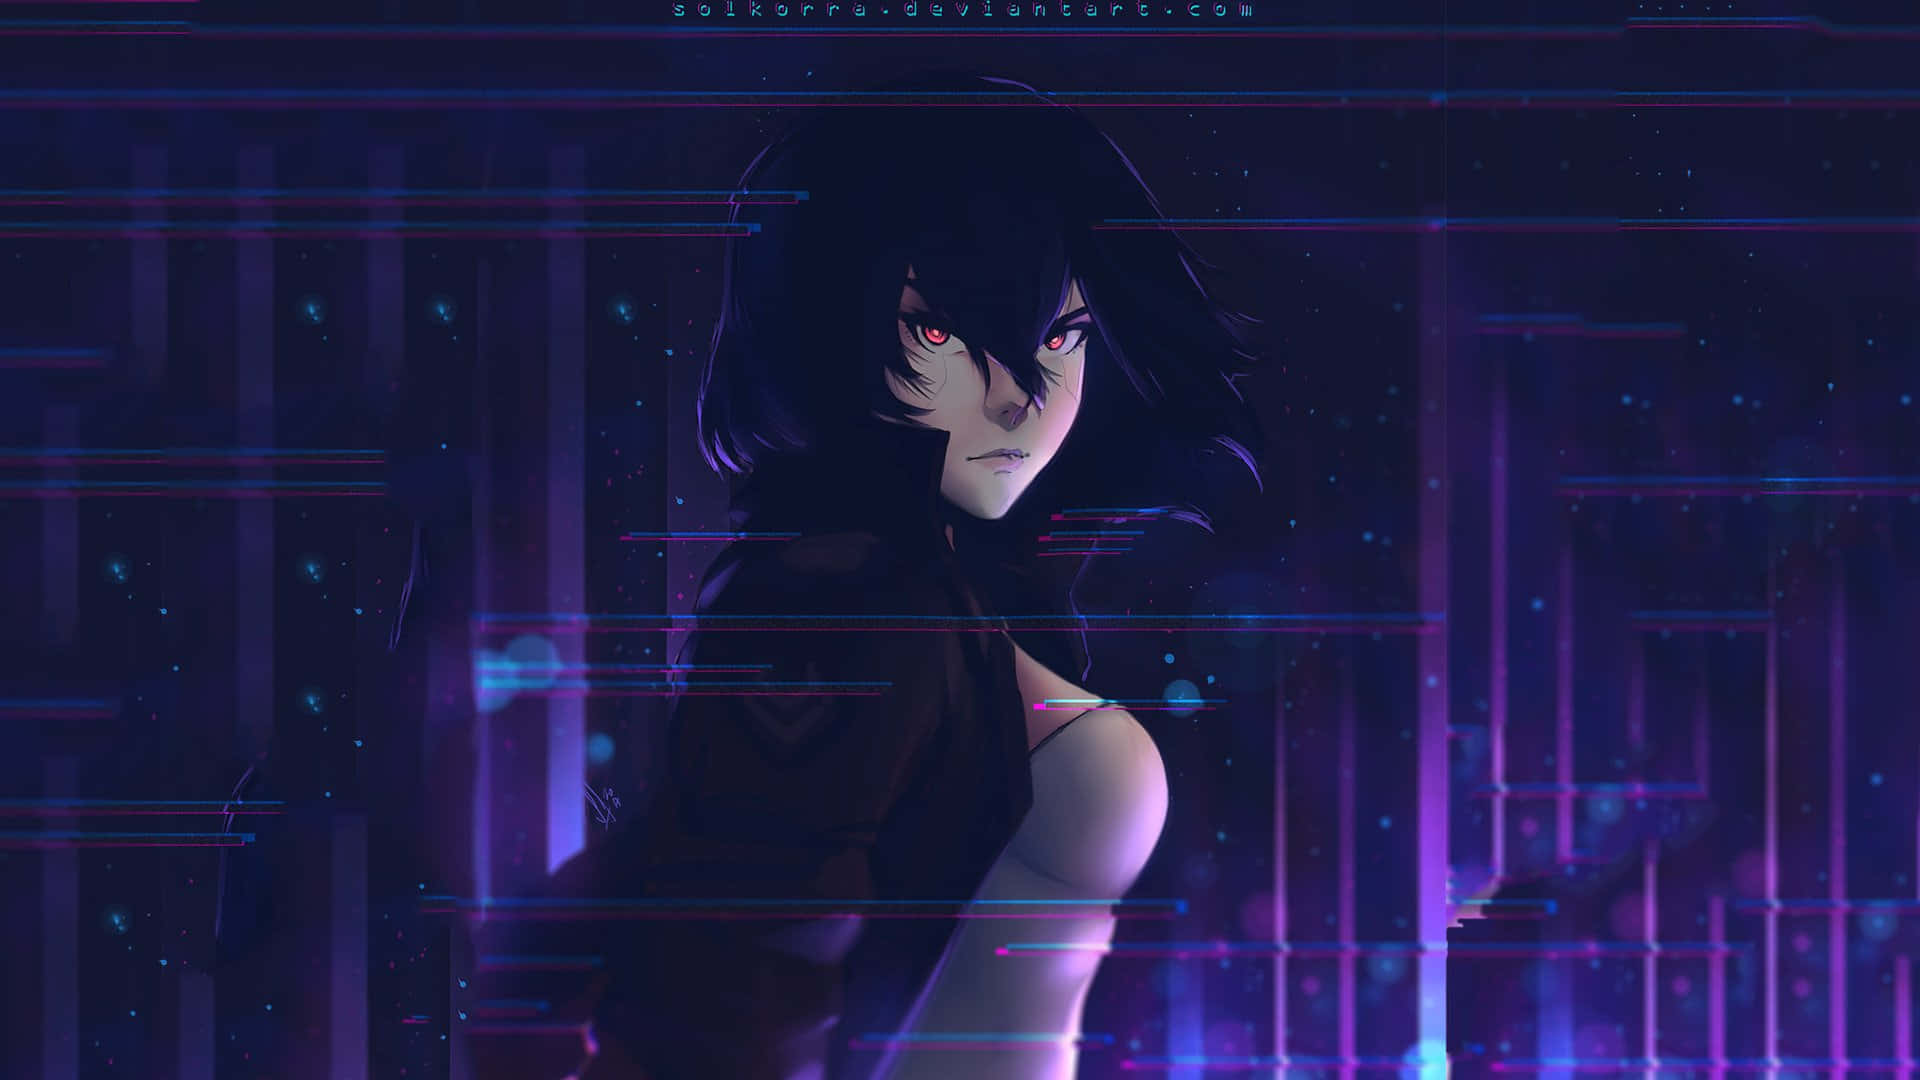 Motoko Kusanagi - Cyberpunk Heroine" Wallpaper